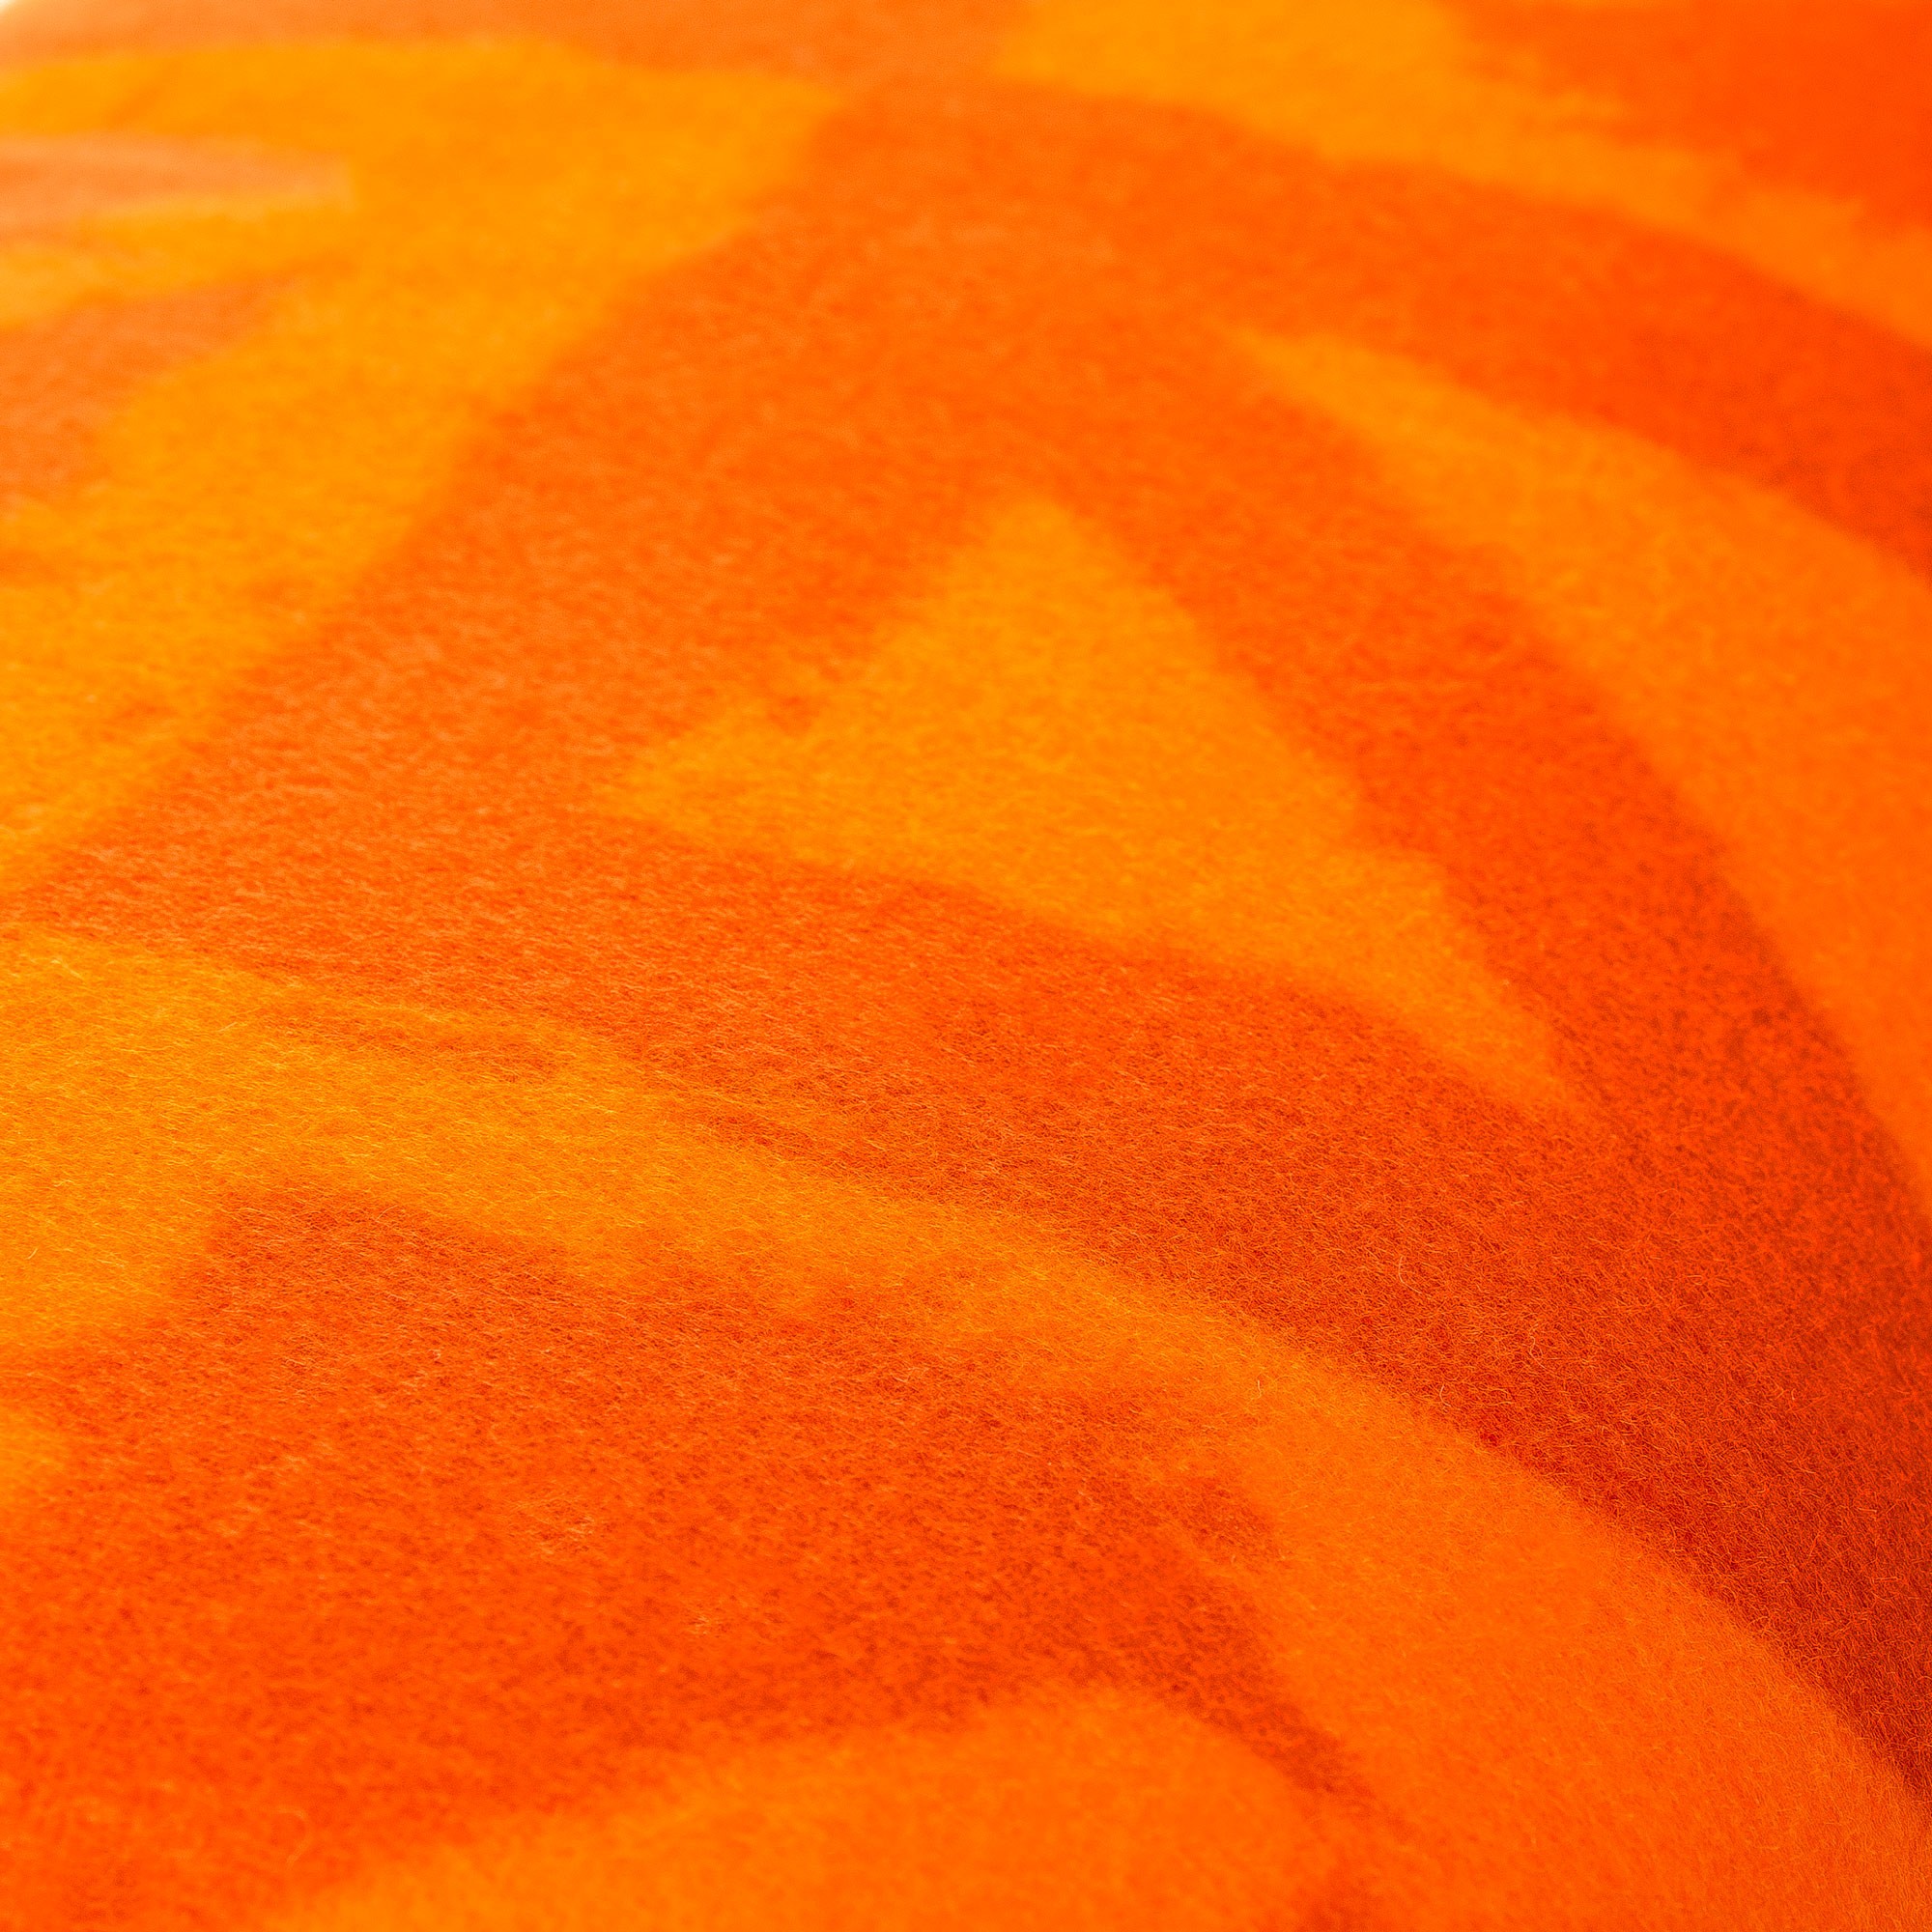 Patura picnic impermeabila 150x180 cm Spokey Picnic Apricot, captusita cu aluminiu OutsideGear Venture